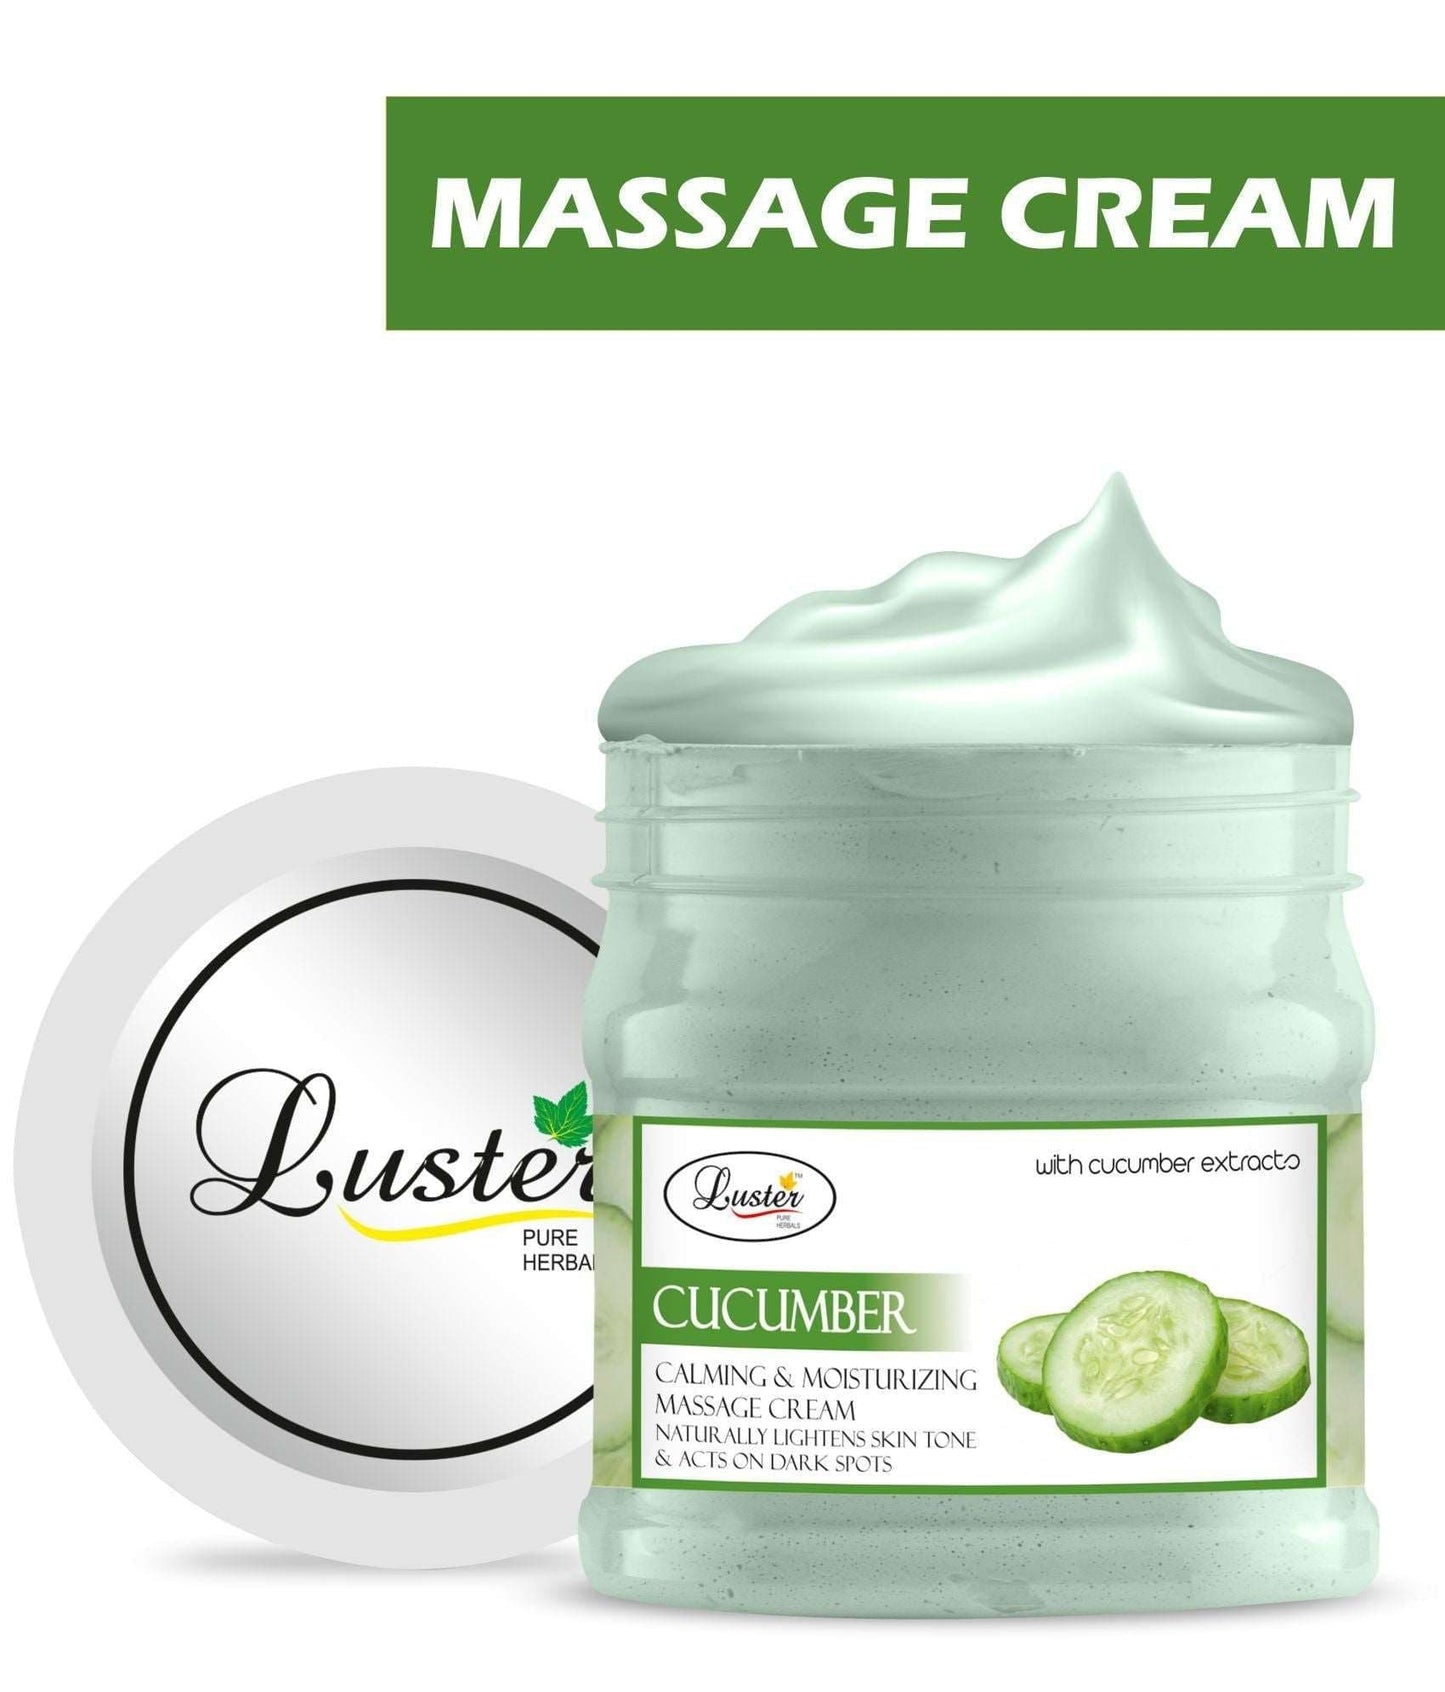 Luster Cucumber Calming & Moisturizing Skin Facial Massage Cream (Paraben & Sulfate Free)-500ml - Luster Cosmetics